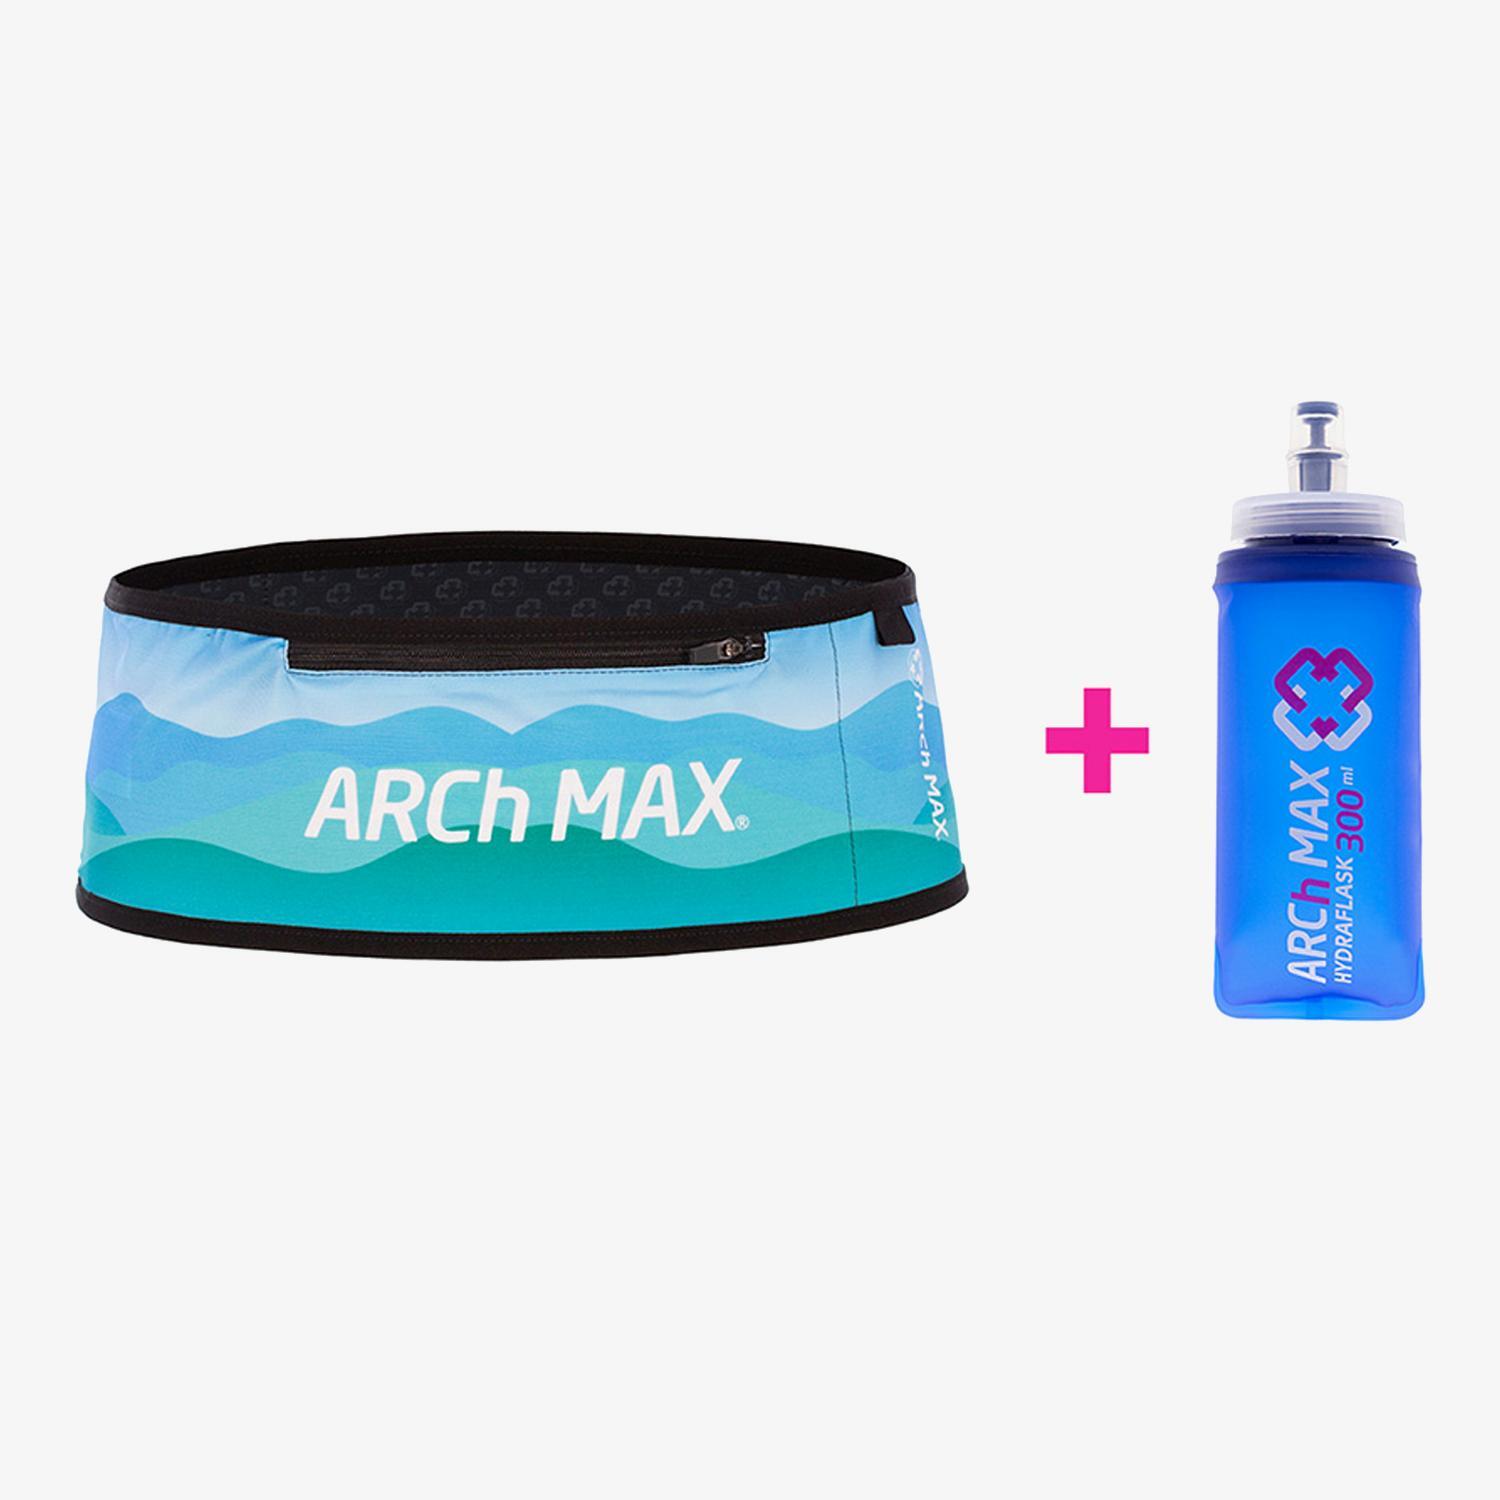 Sacoche Running + Bidon 300ml Arch Max - Bleu - Ceinture Running sports taille S/M